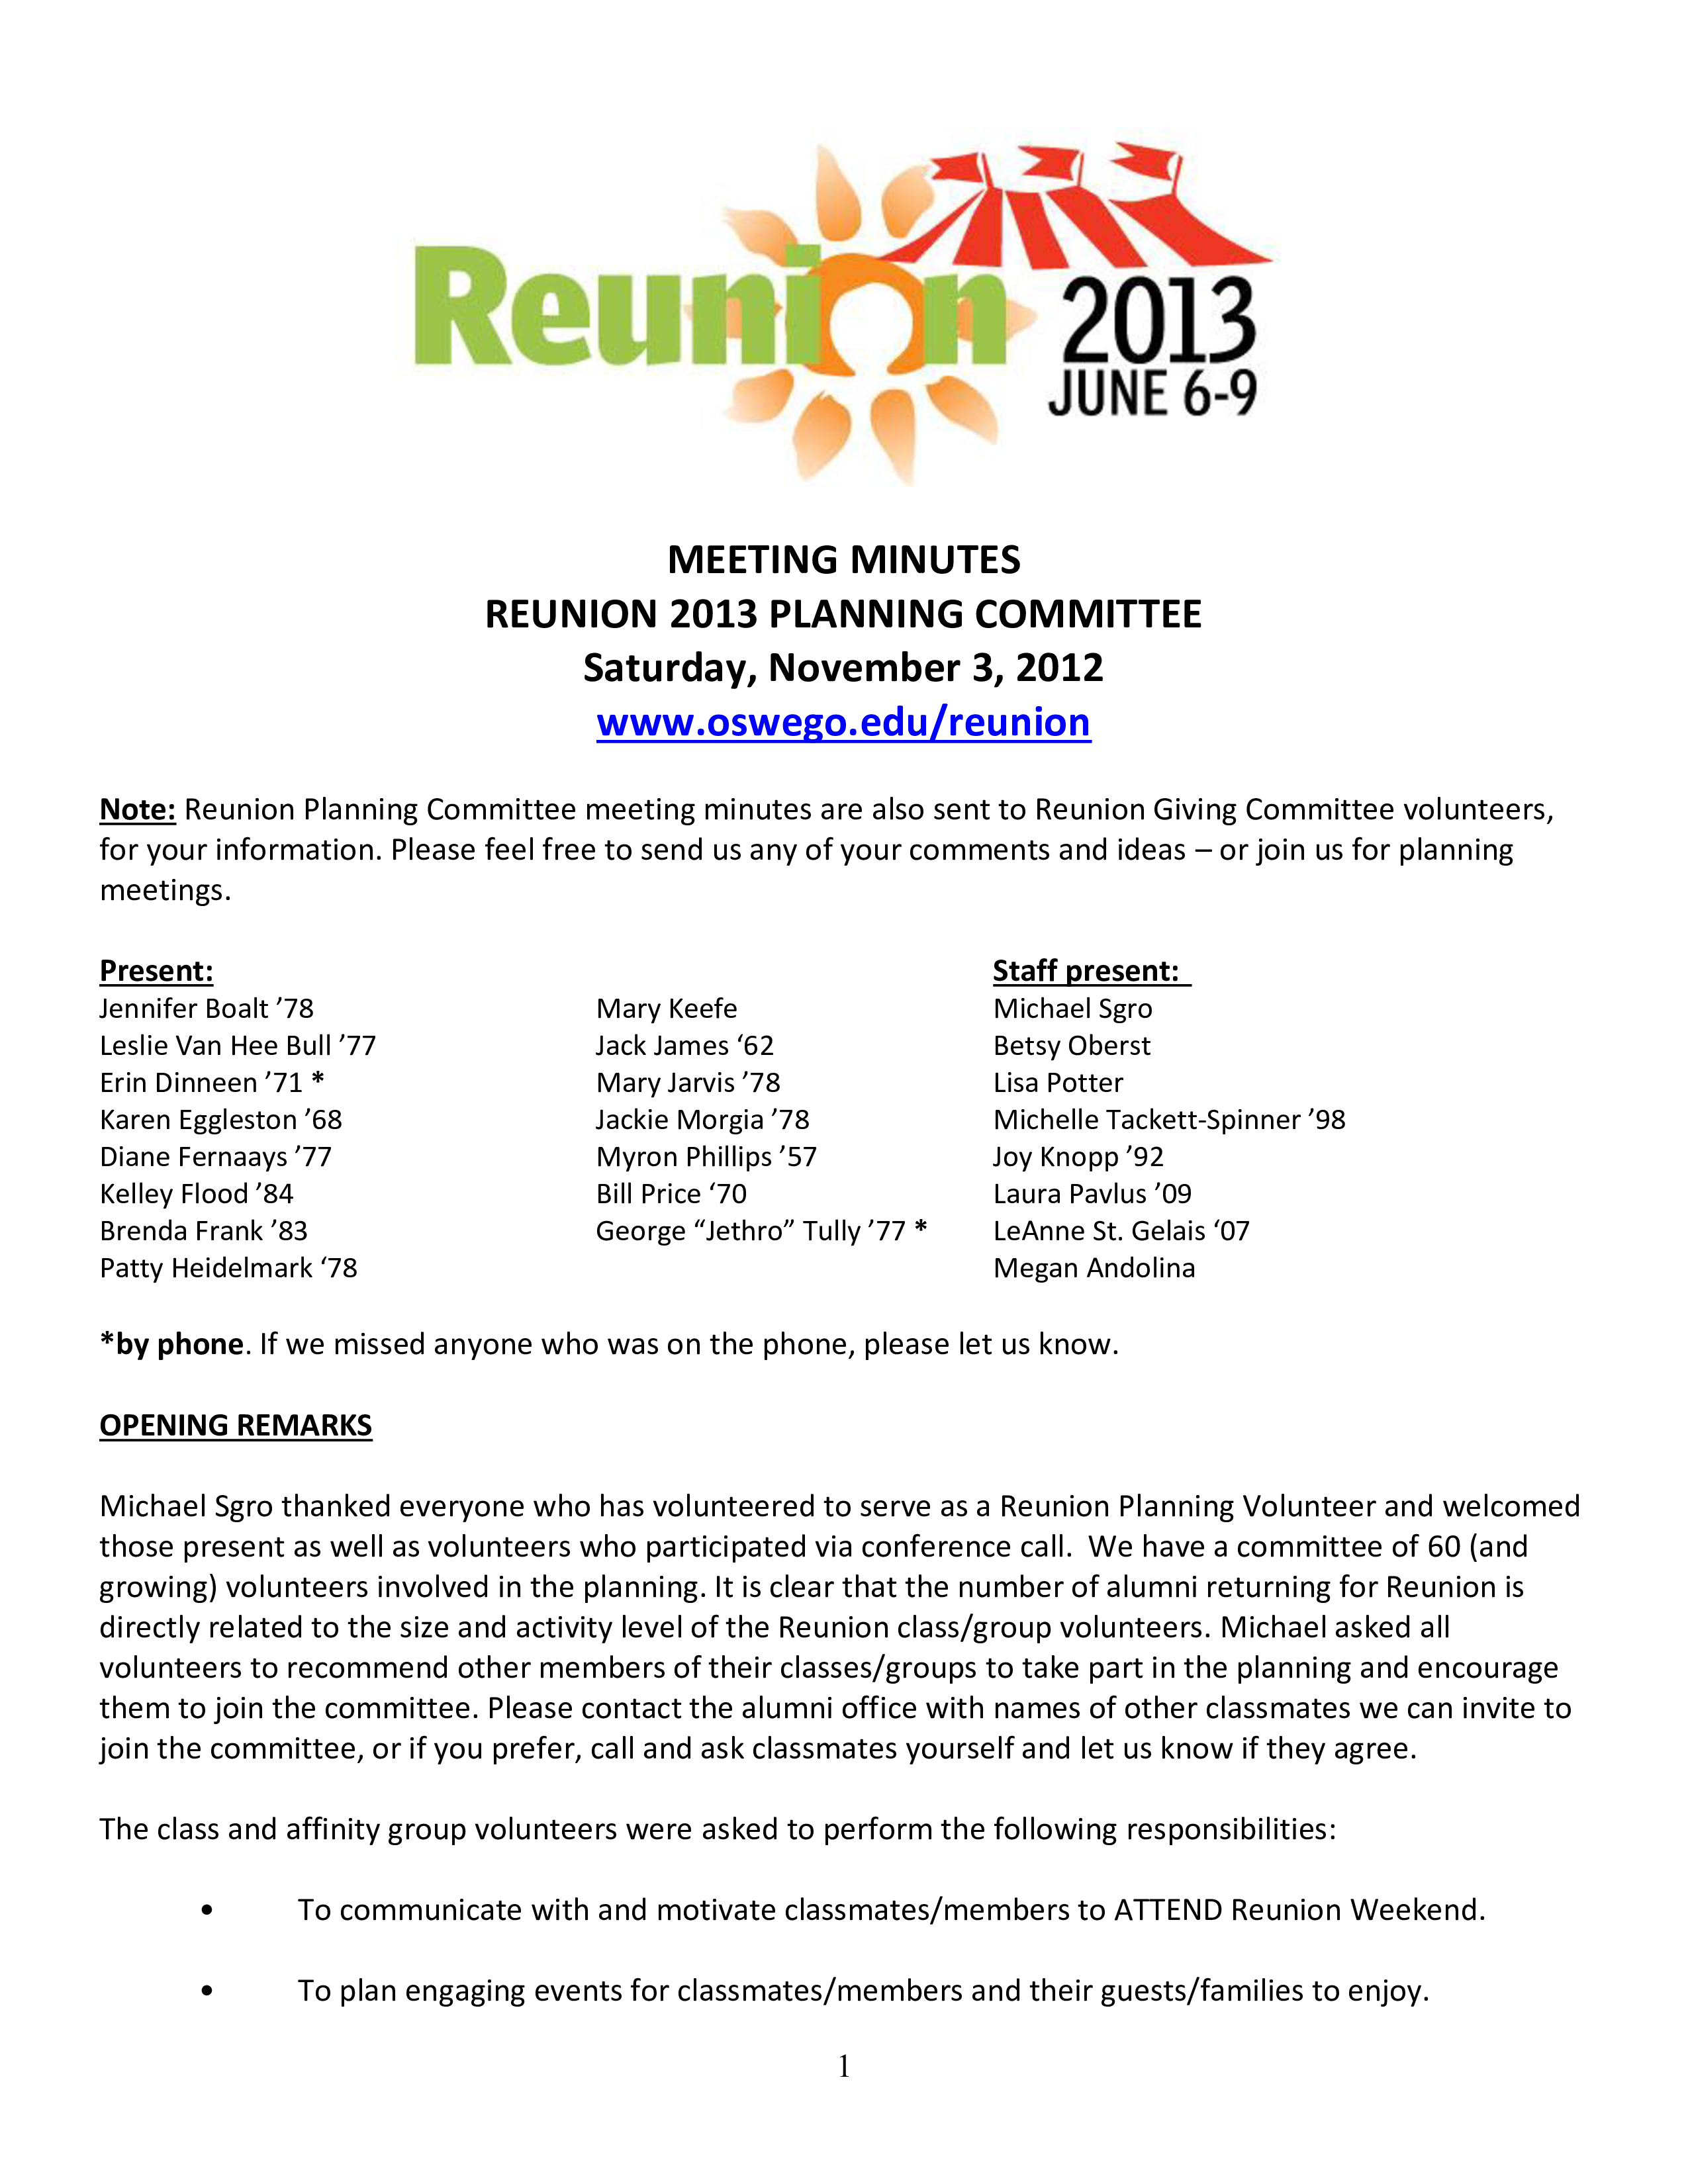 Reunion Program Agenda | Templates at allbusinesstemplates.com